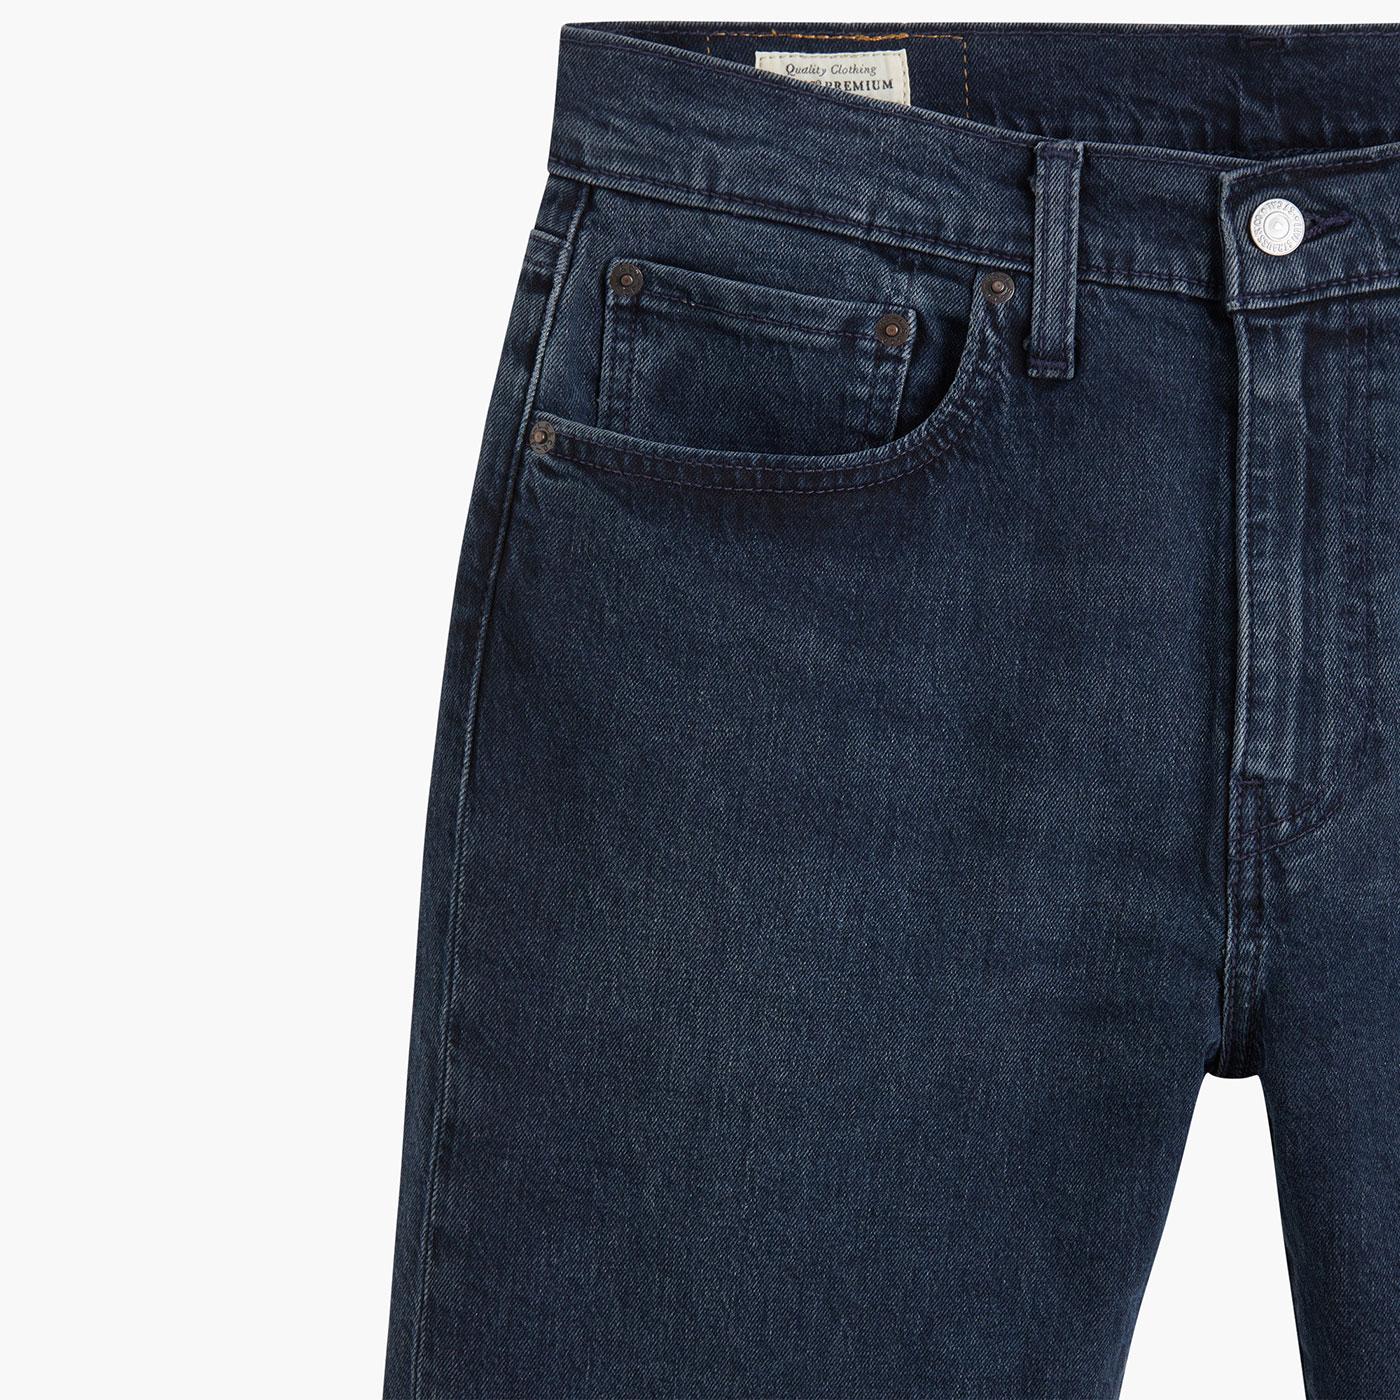 LEVI'S 512 Slim Taper Retro Mod Jeans in Shade Wanderer